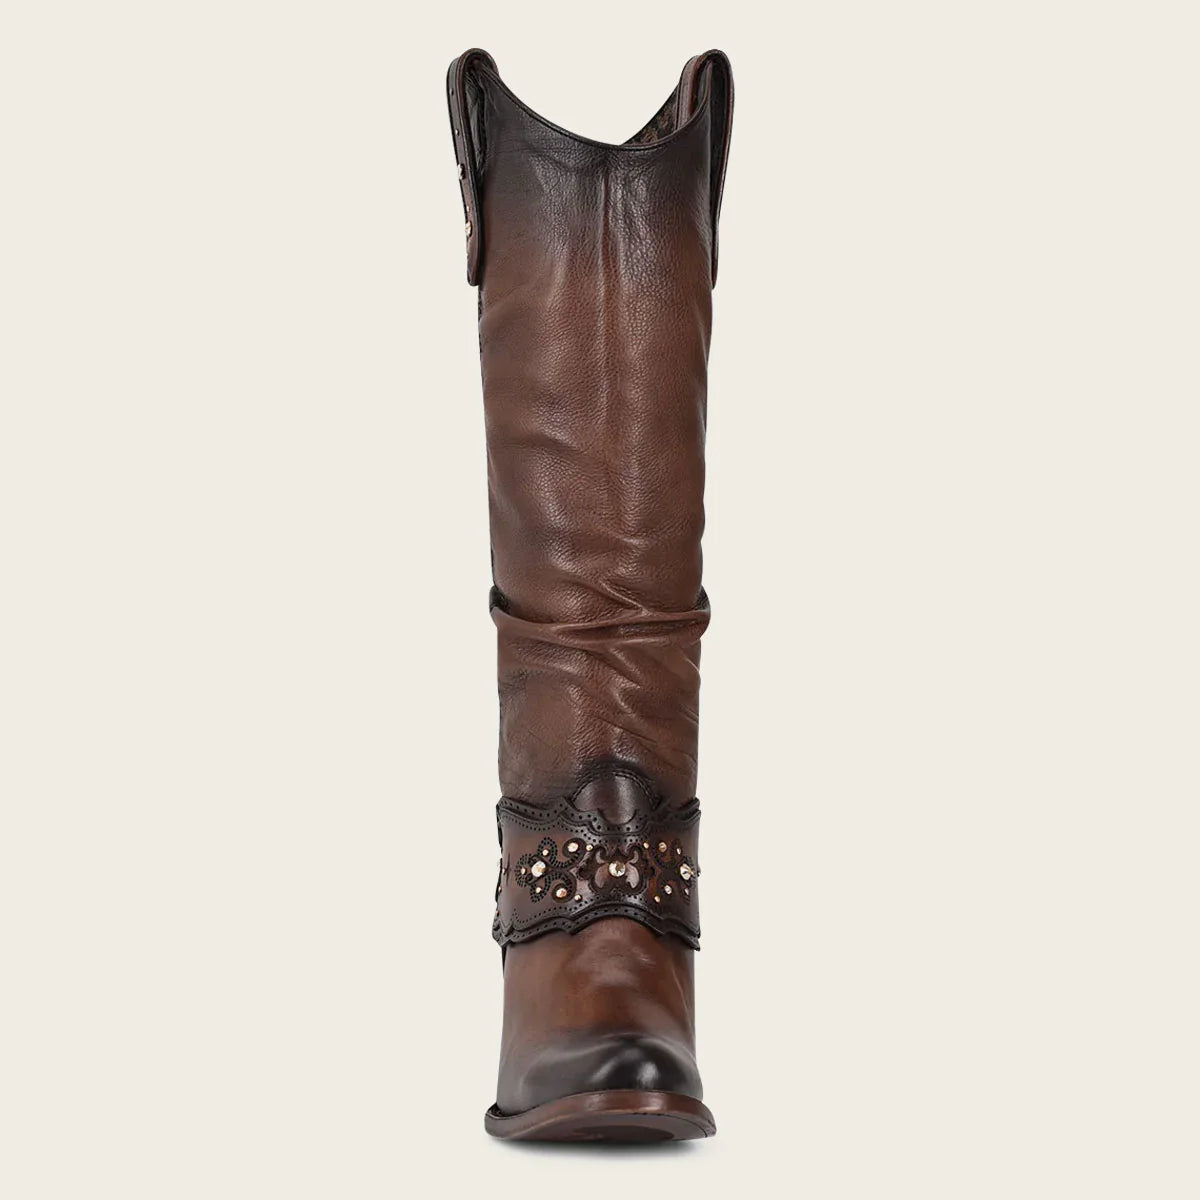 Cuadra boots, women's leather handbags - genuine, handmade